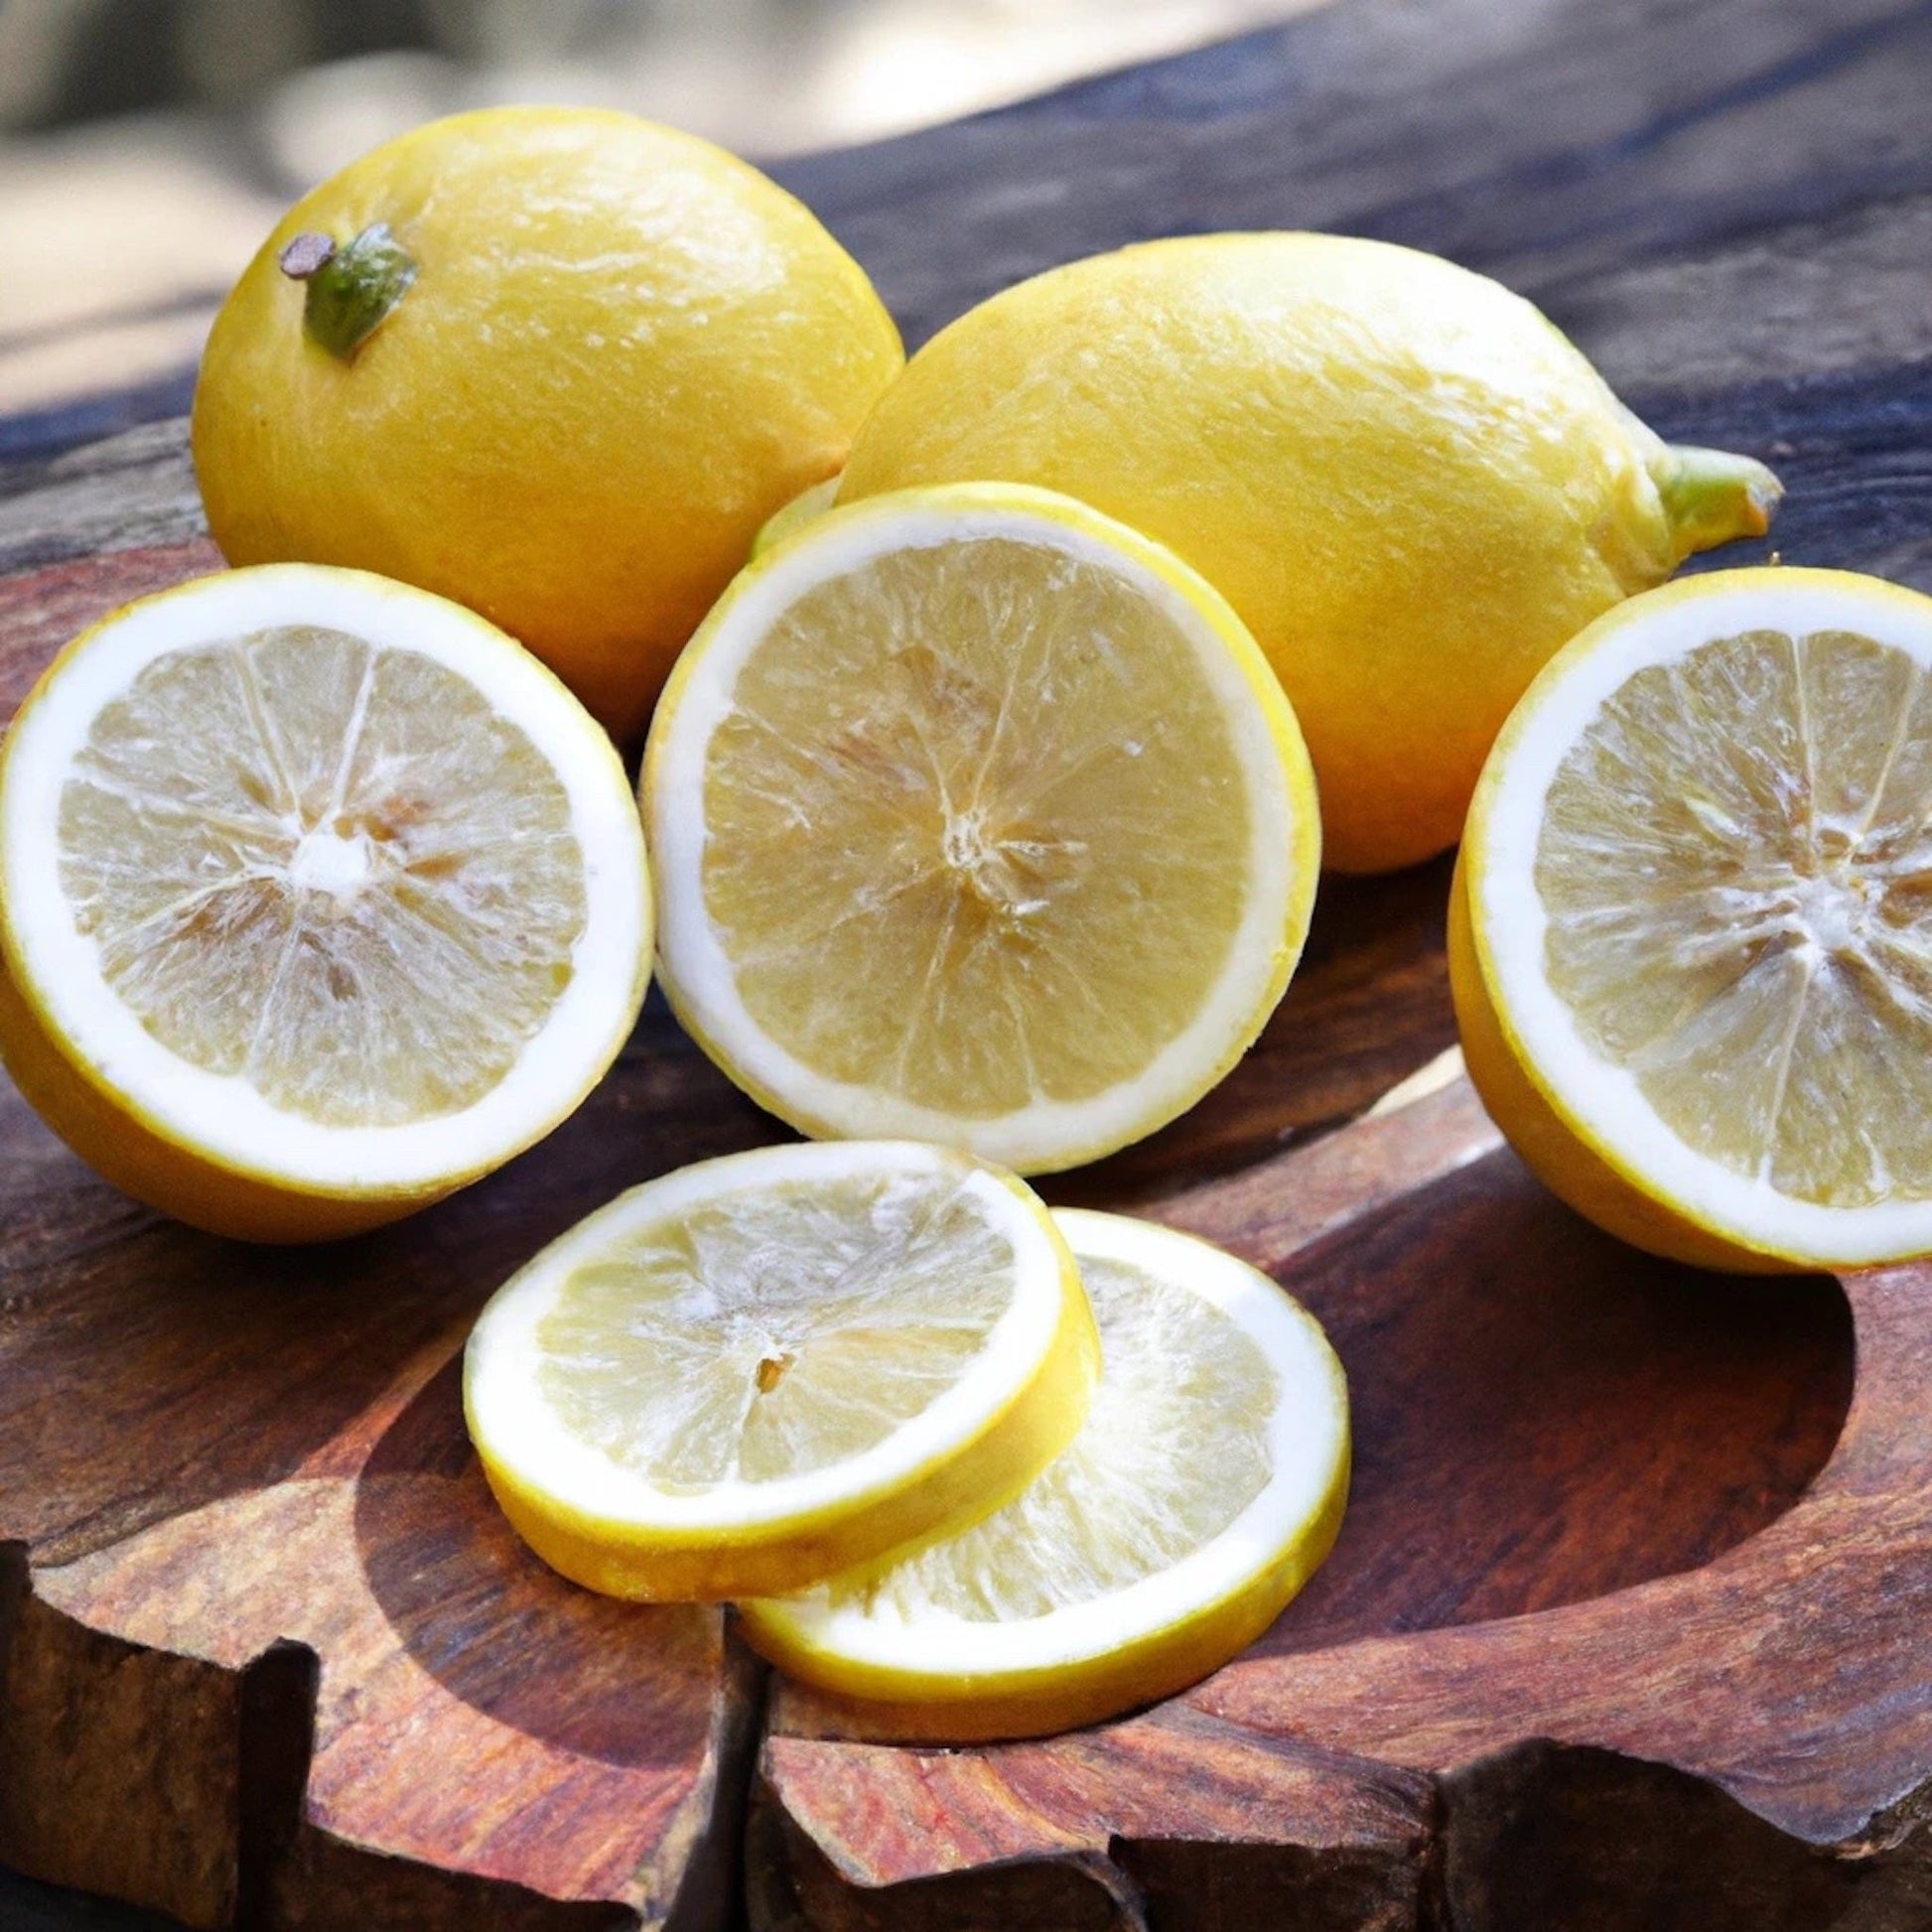 Lemon Eureka - Export and sale of lemons - Citricos Murcia